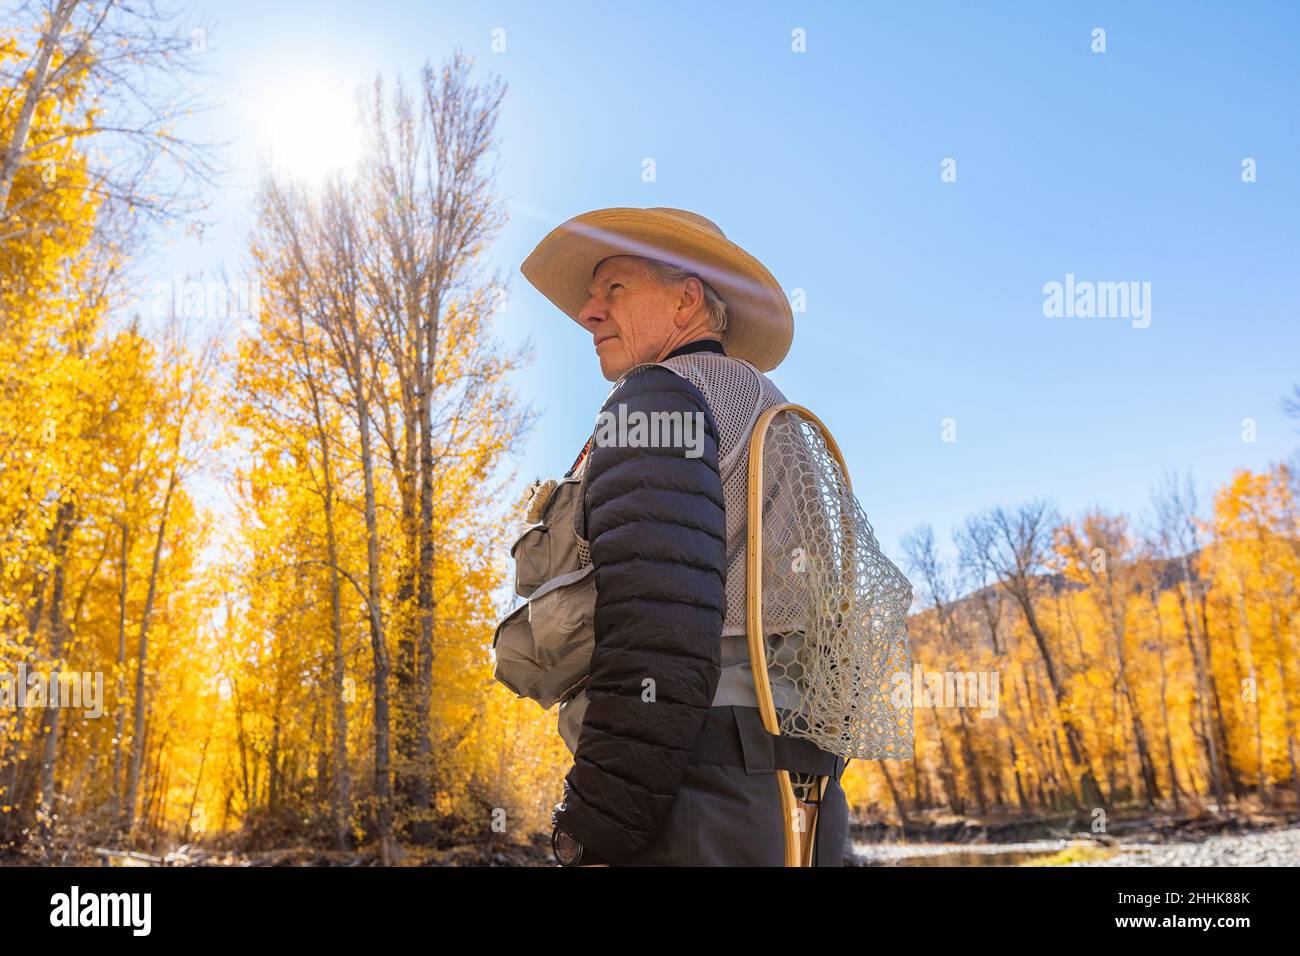 USA, Idaho, Bellevue, Senior fisherman in Autumn landscape Stock Photo